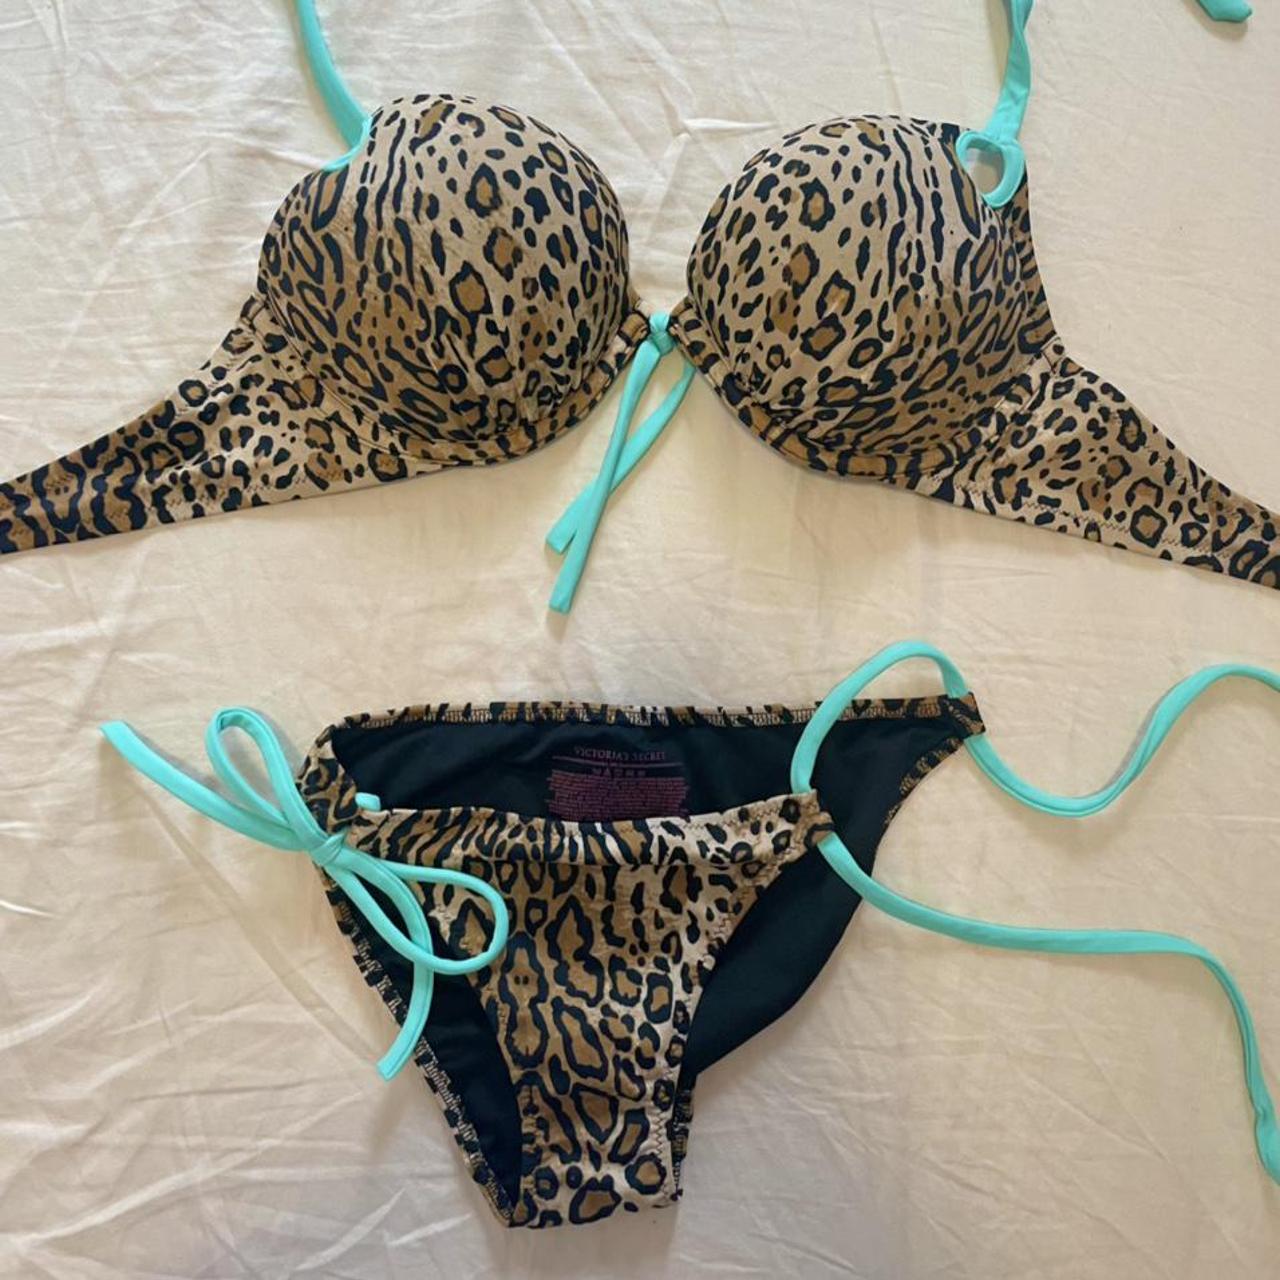 victoria's secret Teal cheetah print push bikini - Depop